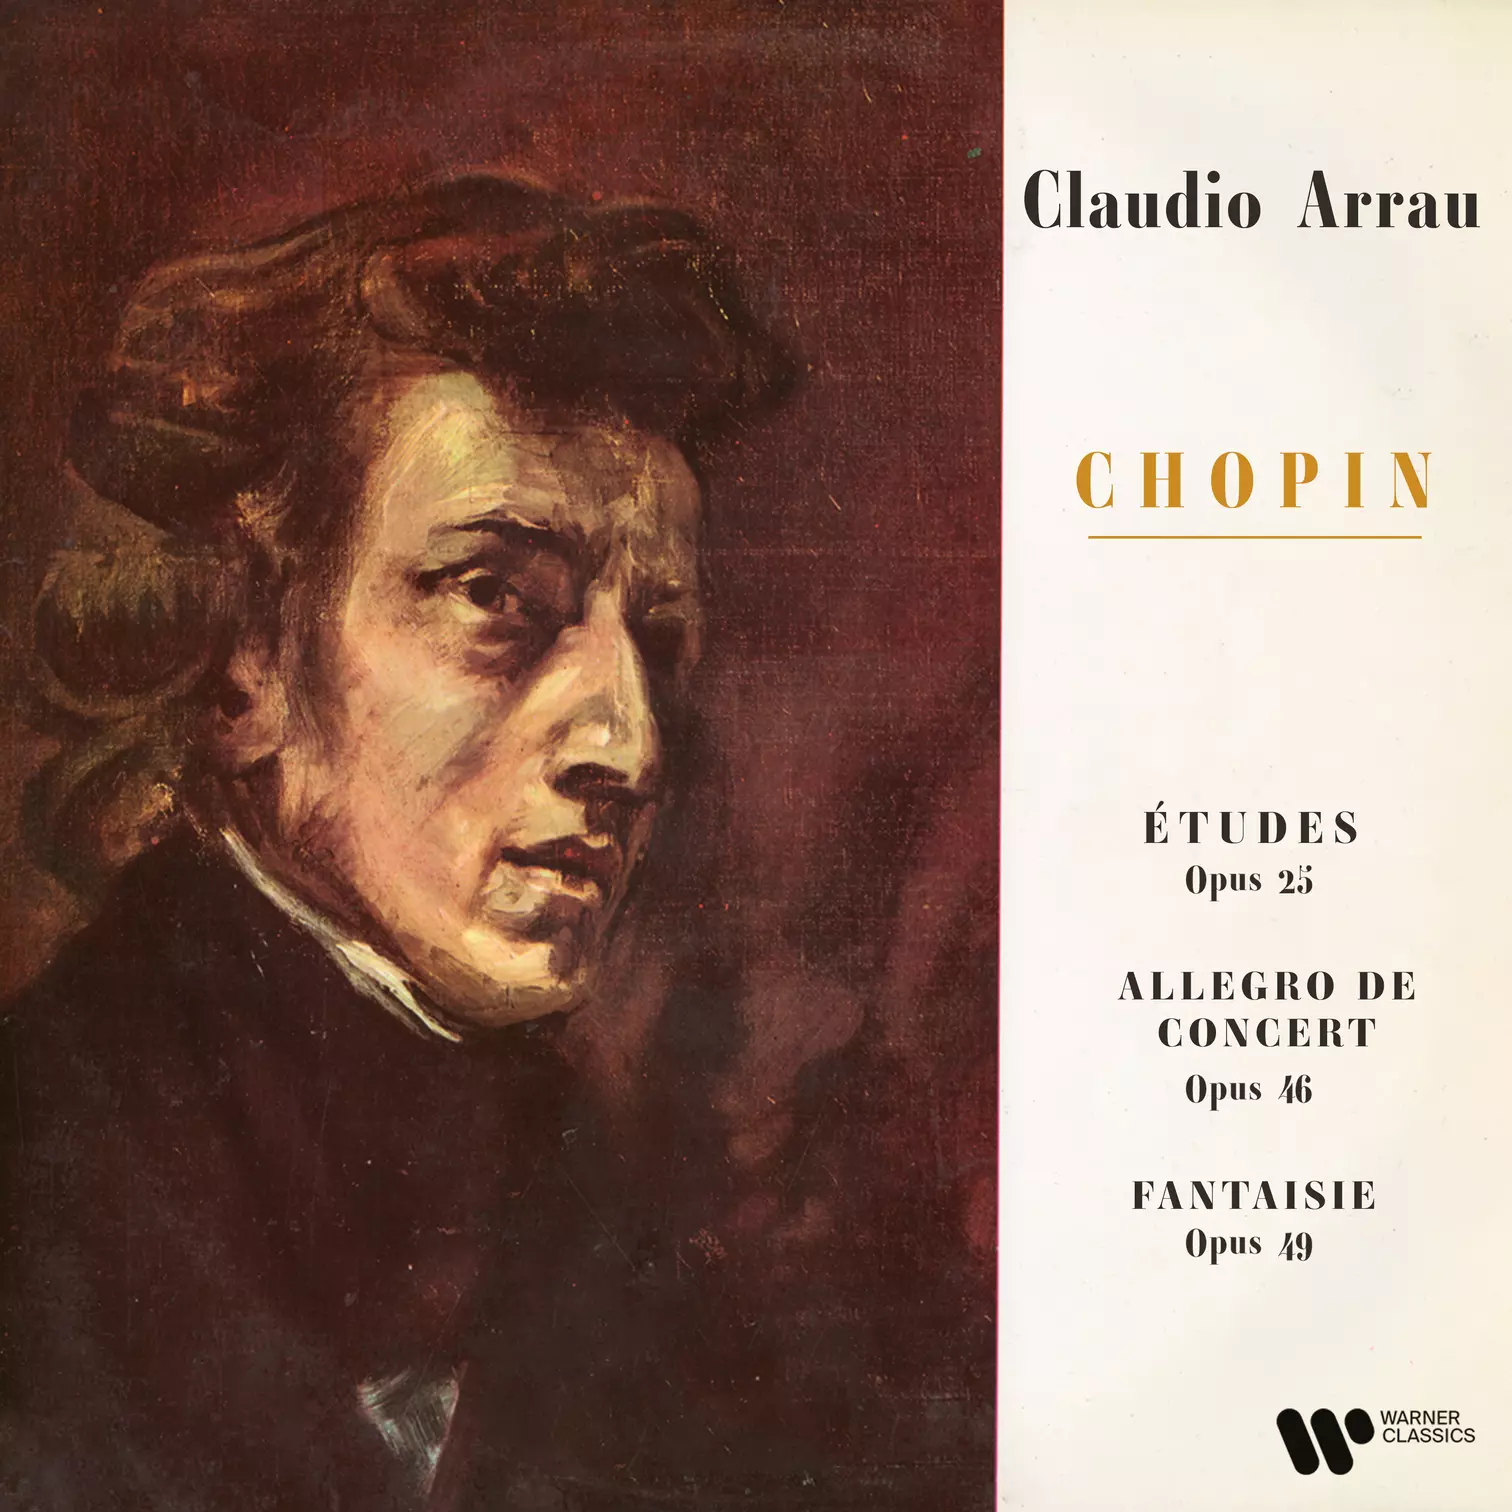 Chopin: Études, Op. 25, Allegro de concert, Op. 46 & Fantaisie, Op. 49